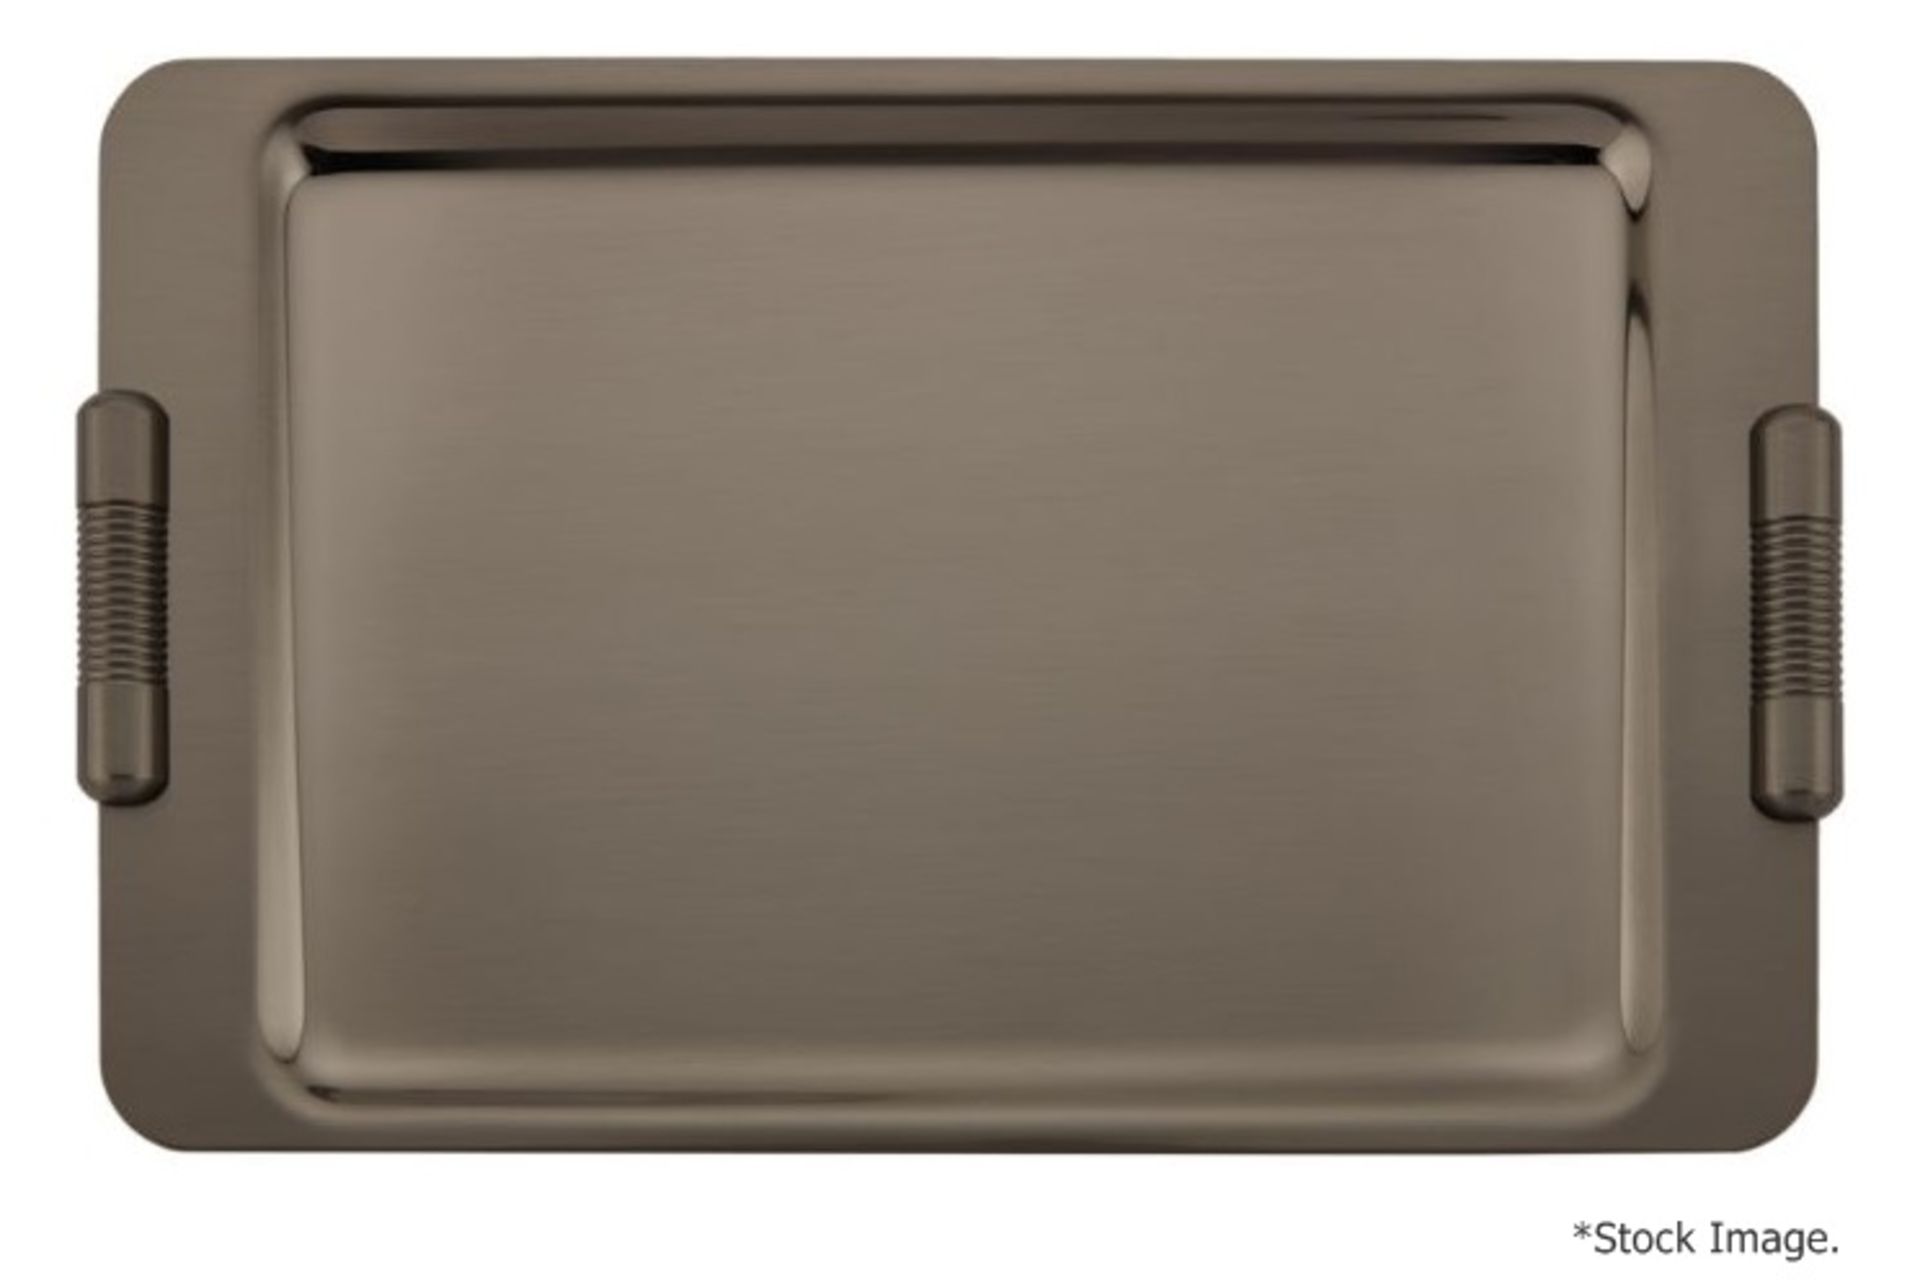 1 x ZODIAC Designer Tray With A Dark Nickel Finish - Original Price £439.00 - Ref: 5332914/HAS1171/